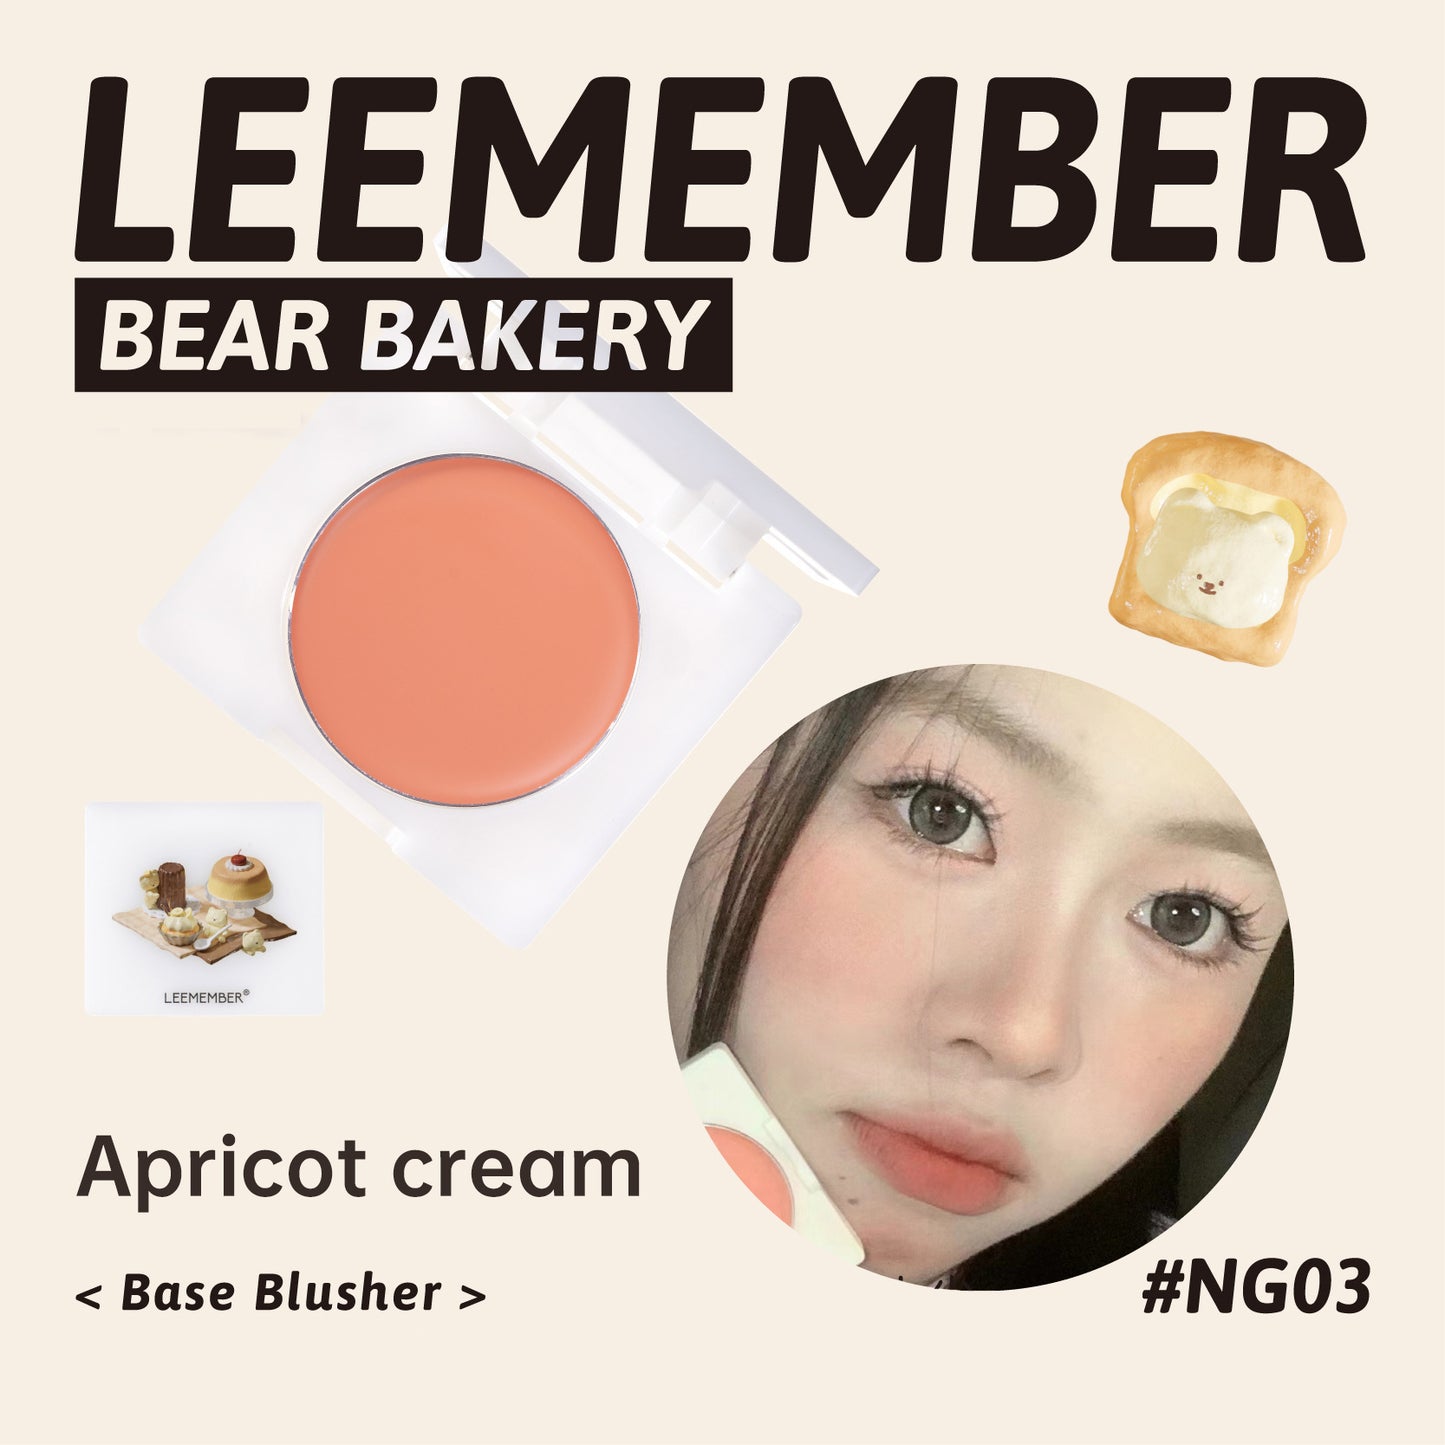 【NEW】LEEMEMBER/Milk Factory Cream Blush Cream